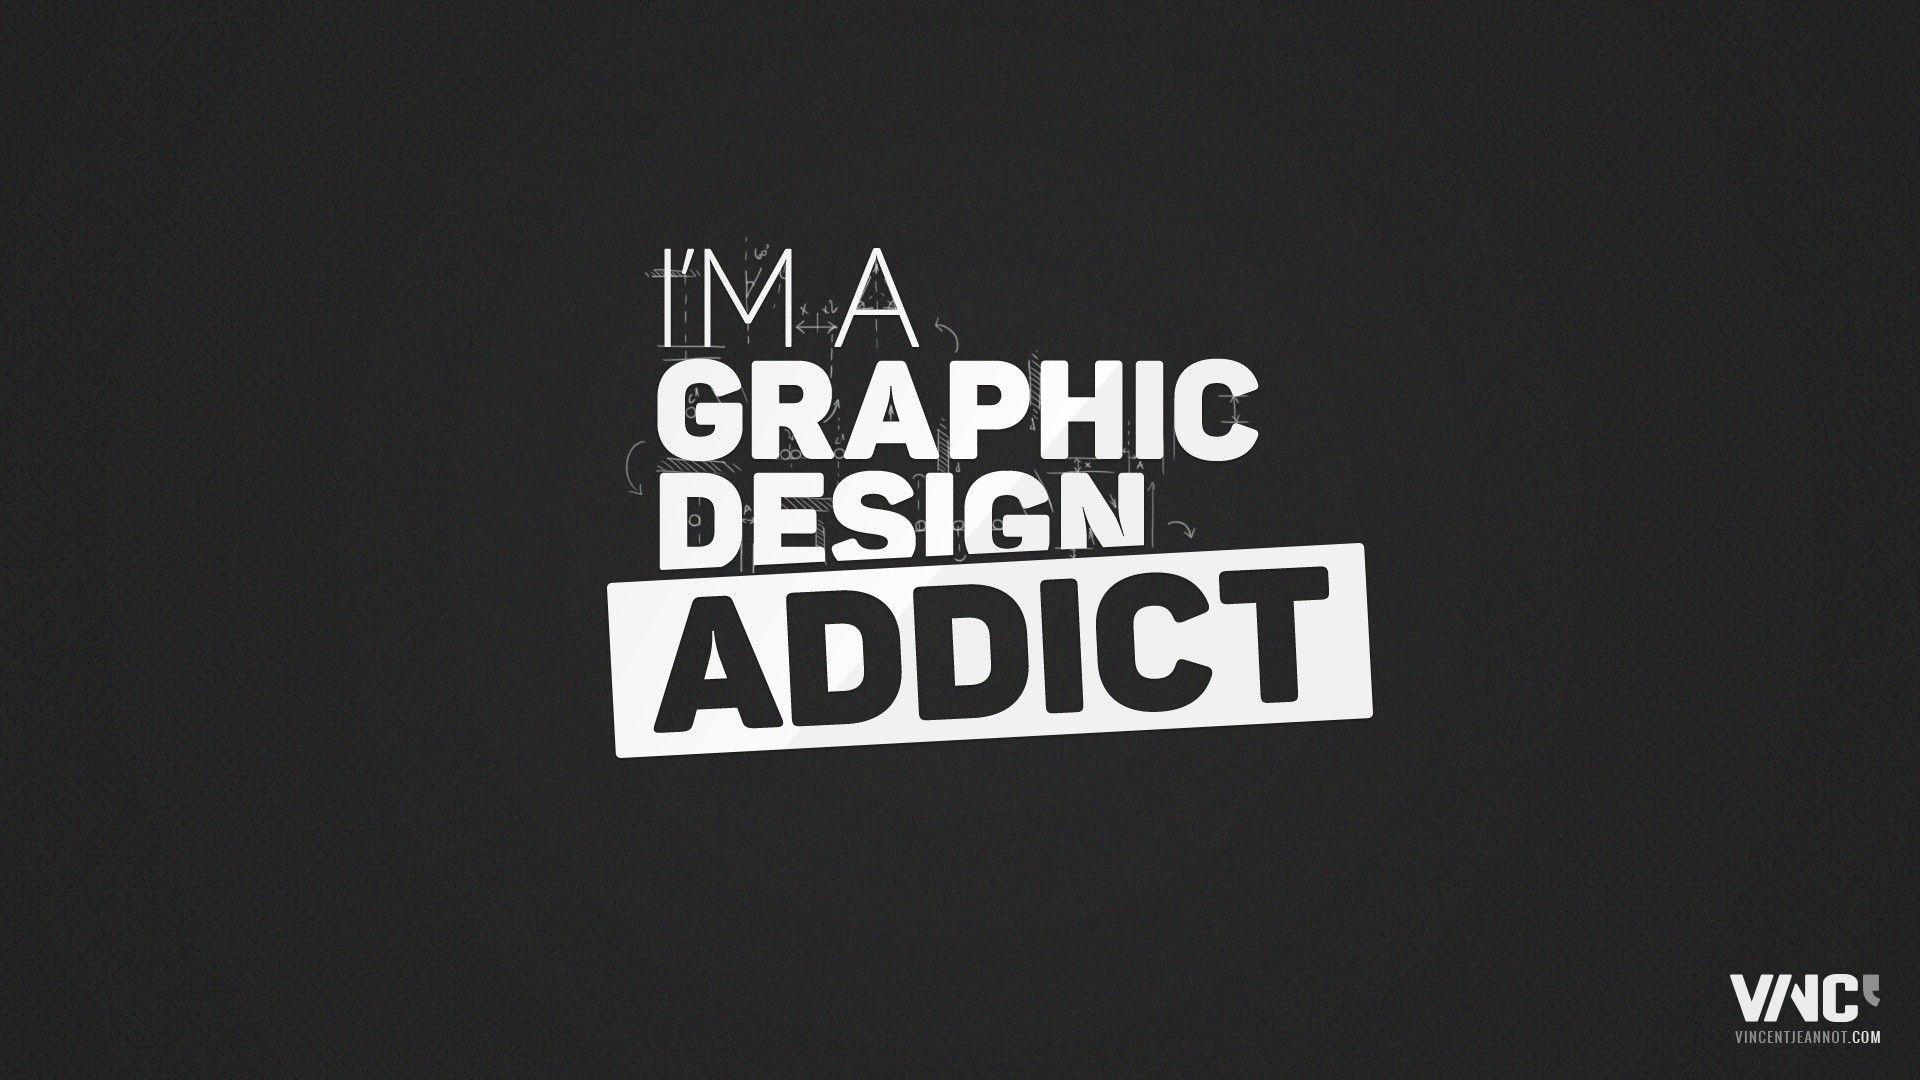 I Am A Graphic Design Addict, HD Typography, 4k Wallpaper, Image